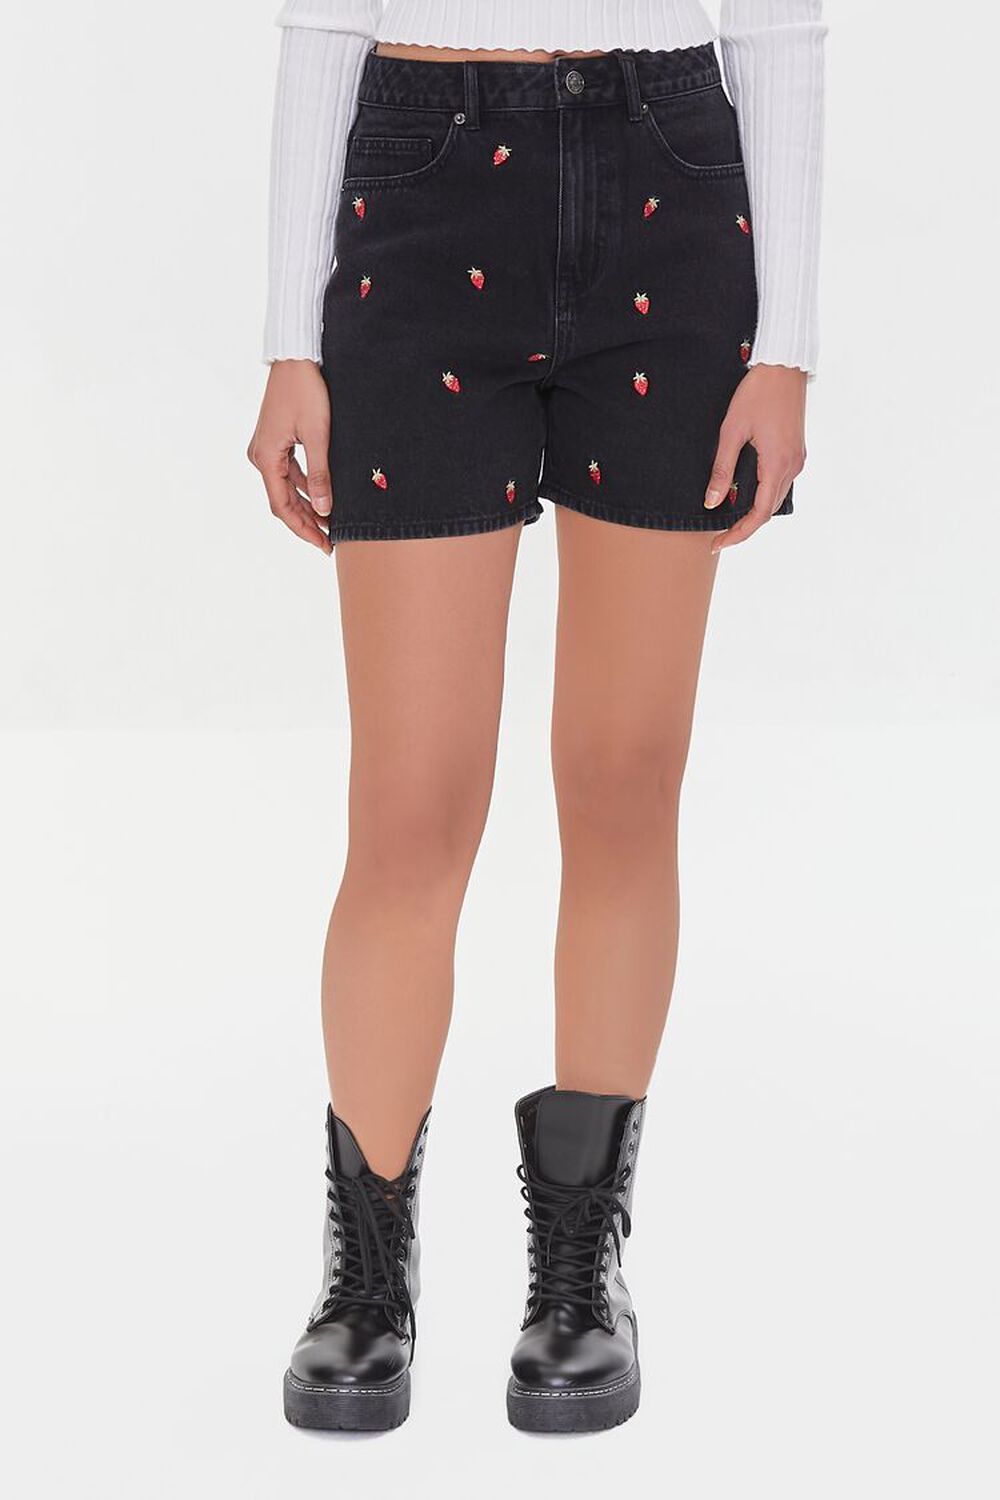 Strawberry High-Rise Denim Shorts, image 2